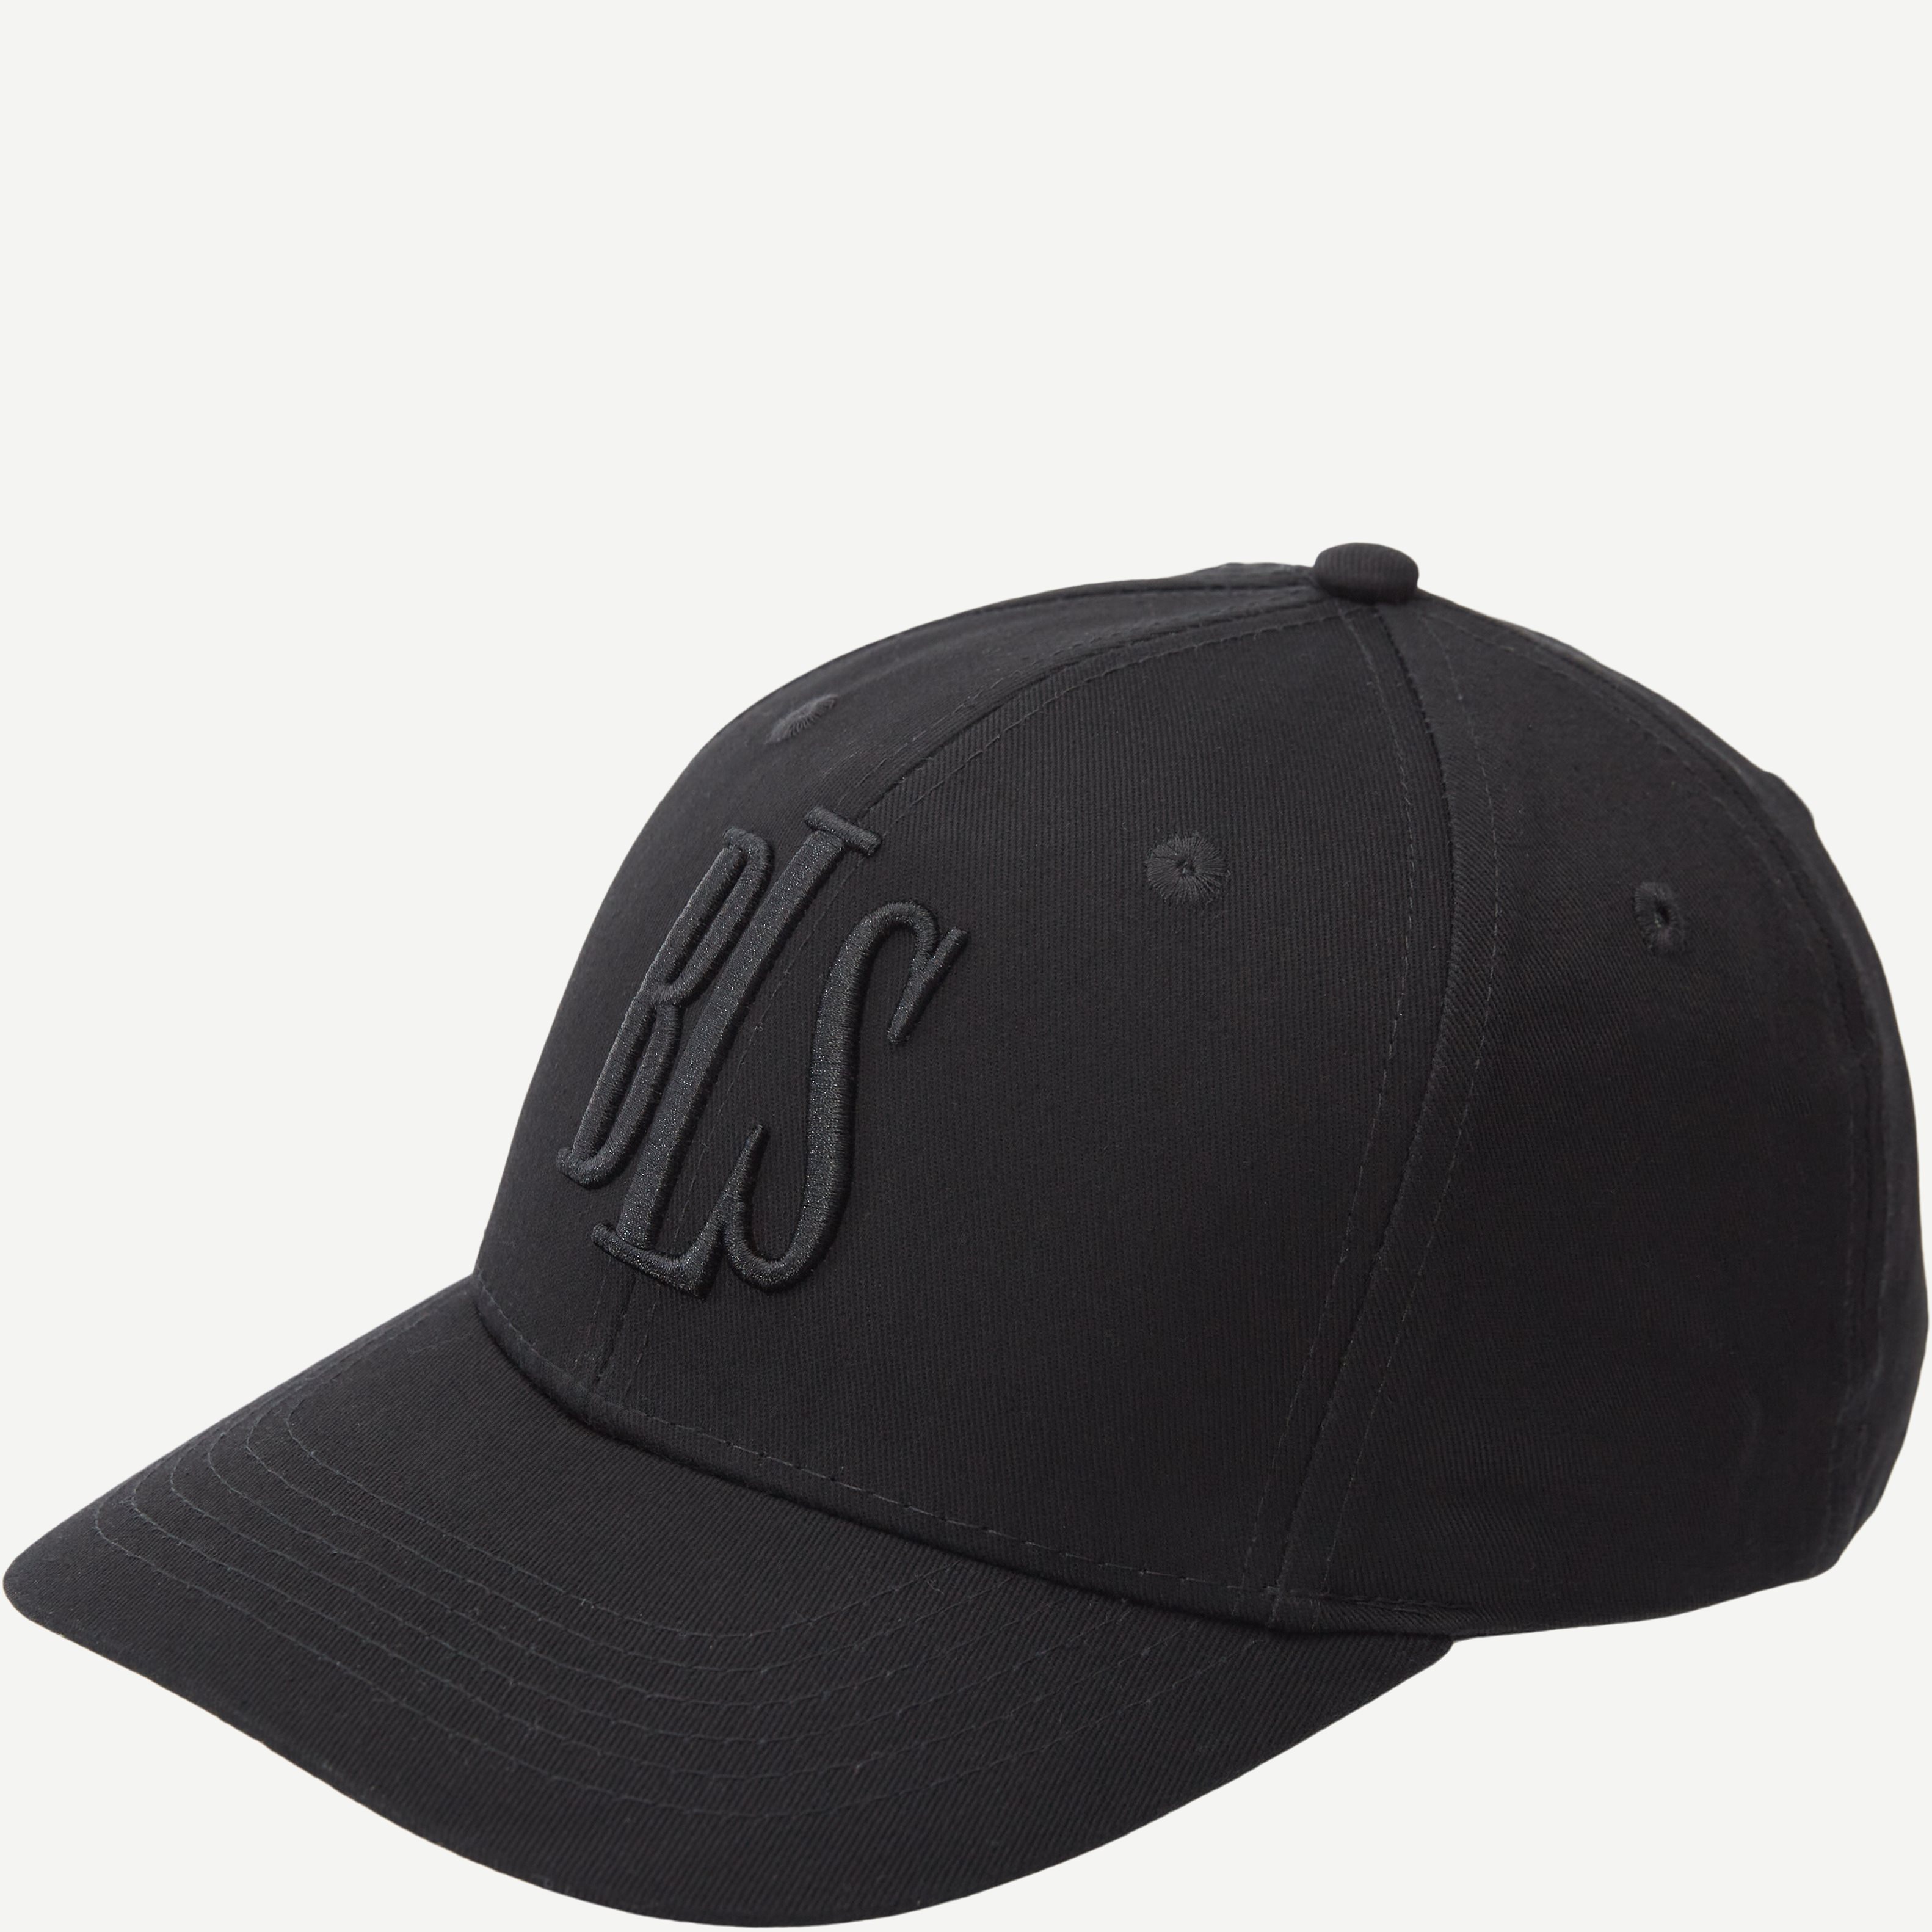 Classic baseball cap tonal black - Caps - Regular fit - Sort